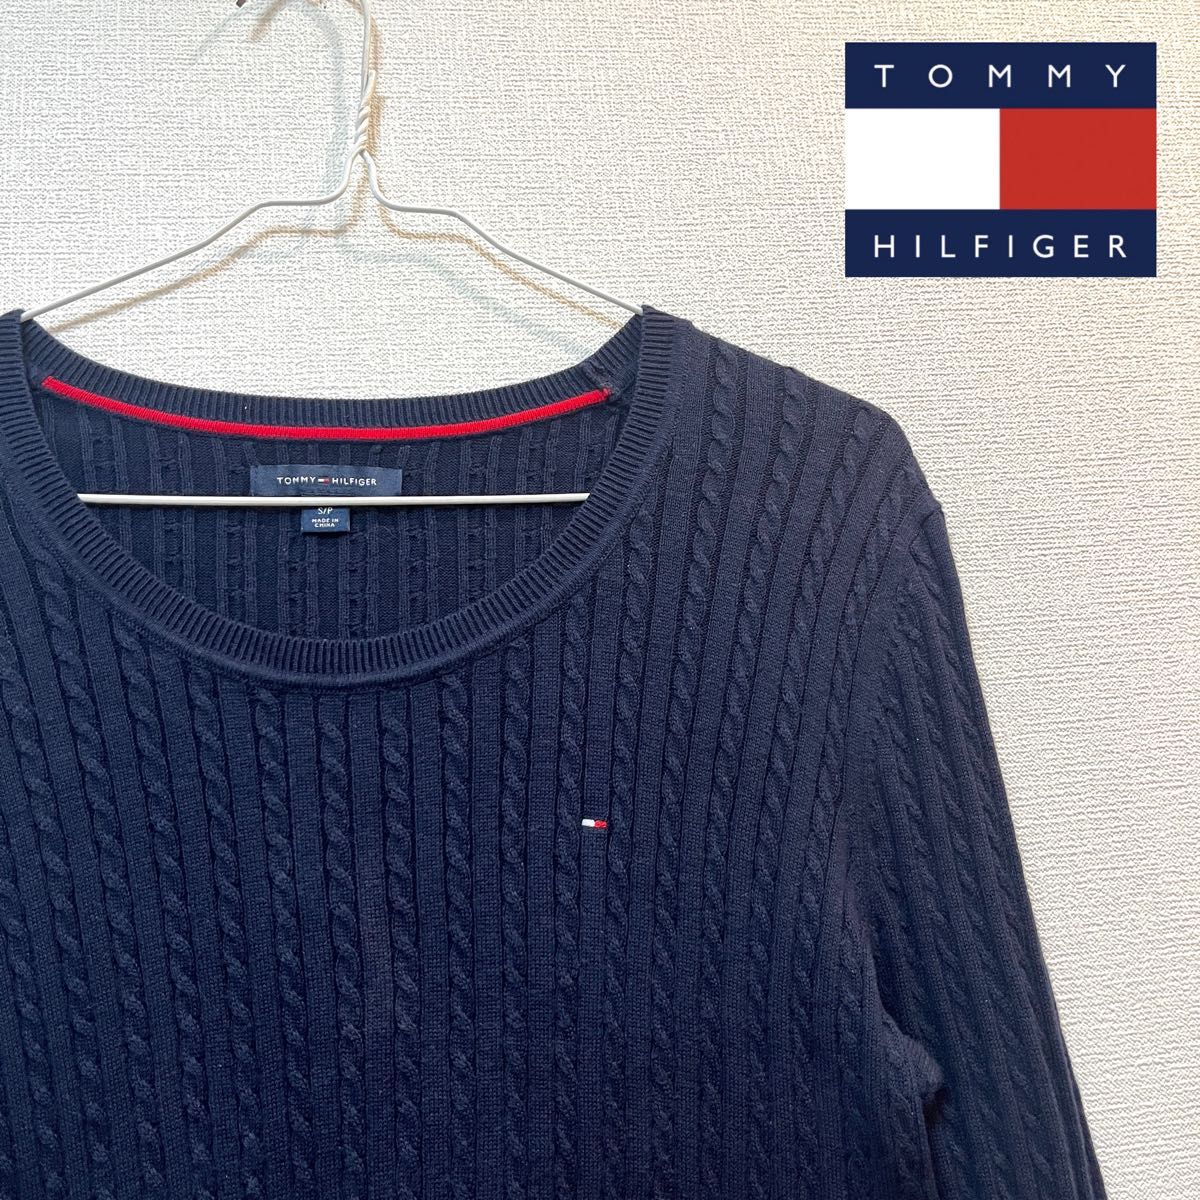 TOMMY HILFIGER(トミーヒルフィガー) Uネック ブランドロゴ ケーブルニットセーター ネイビー 紺 トップス